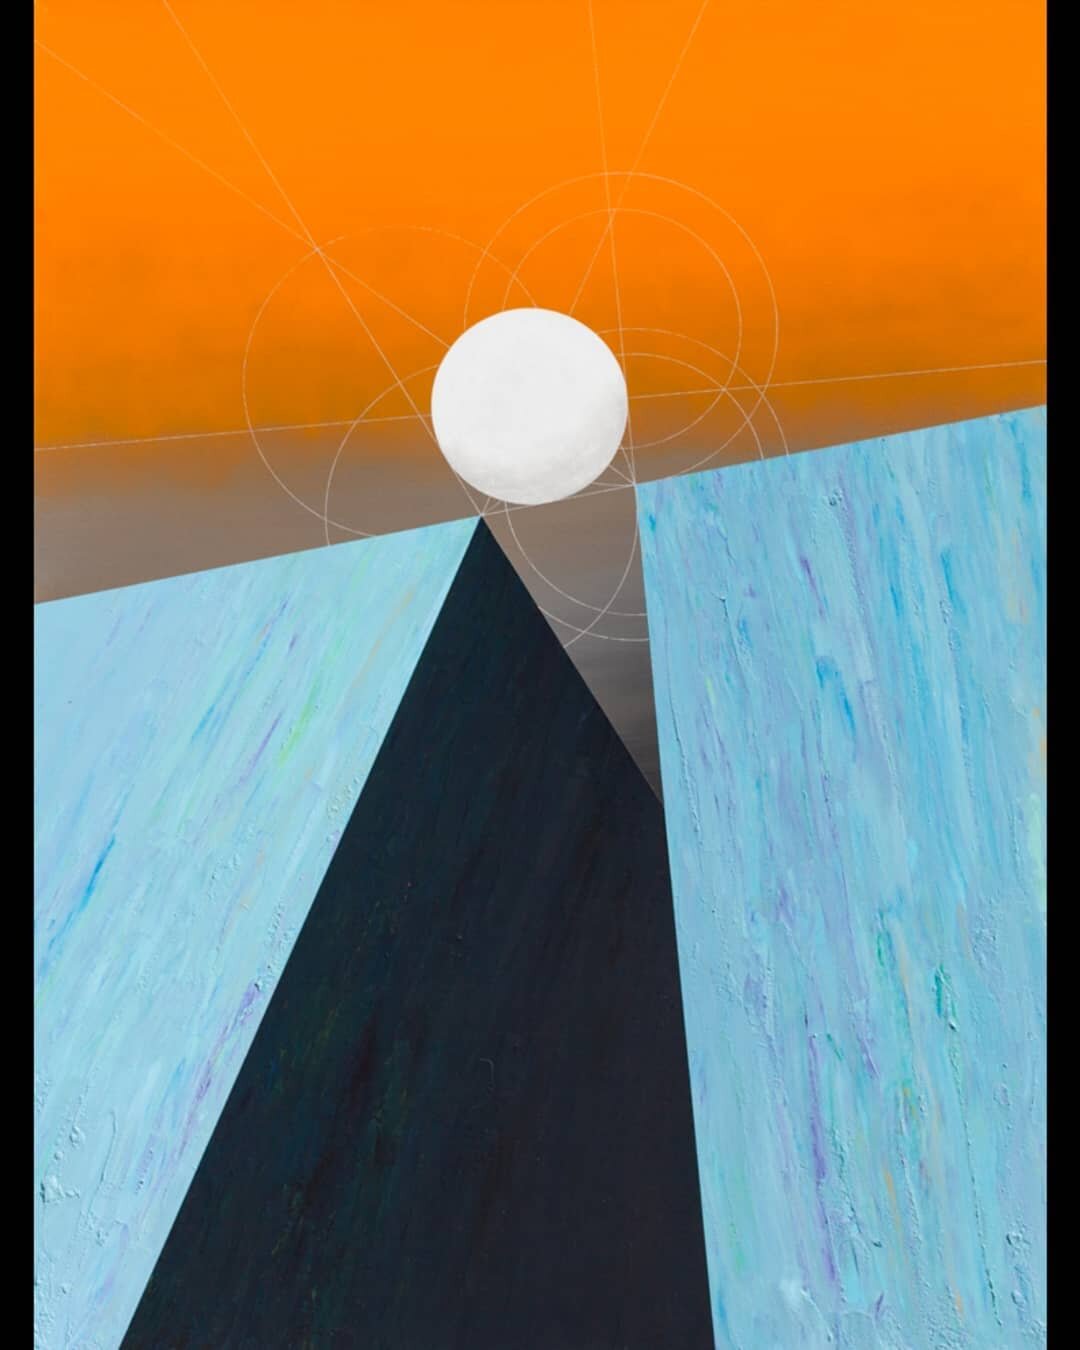 A full circle emerges!⁣
⁣
&quot;Excircle&quot;, 36&quot;x48&quot;, acrylic and ink on canvas, 2019⁣
⁣
#orangeandblue #blueandorange #fineart #geometricabstraction #modernartists #bayareaartist #conceptualart #kunst #artcollector #mathematics #compass